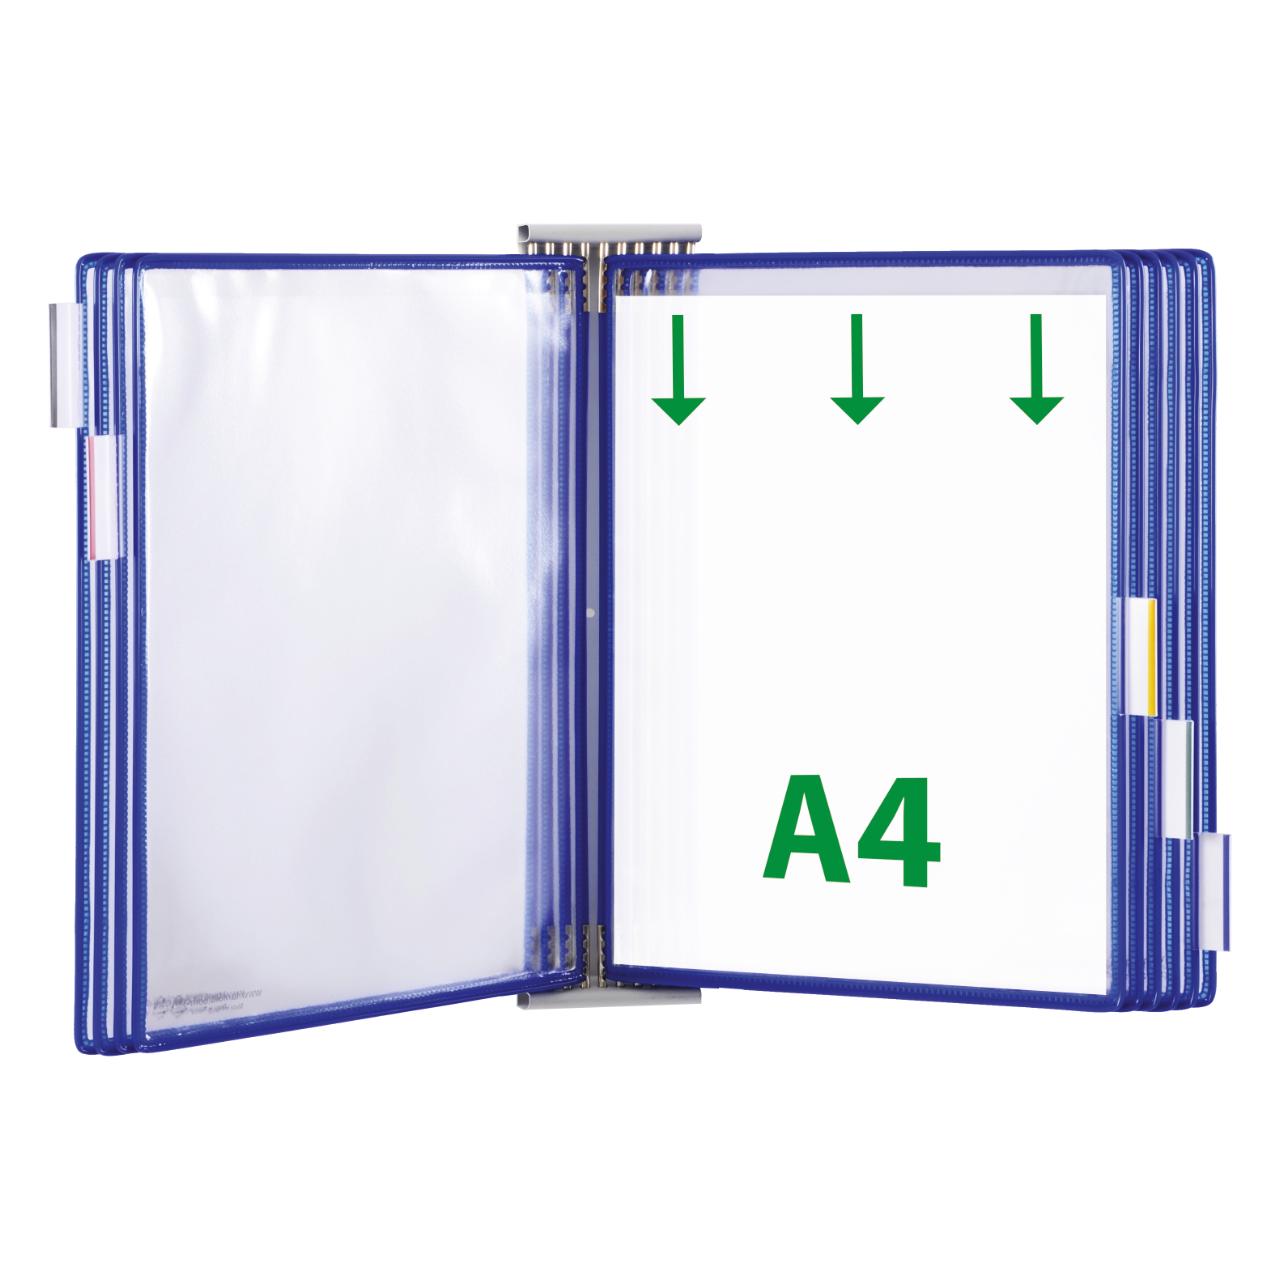 Tarifold Metal Wall Document Display Extension Kit, A4, 10 Pockets